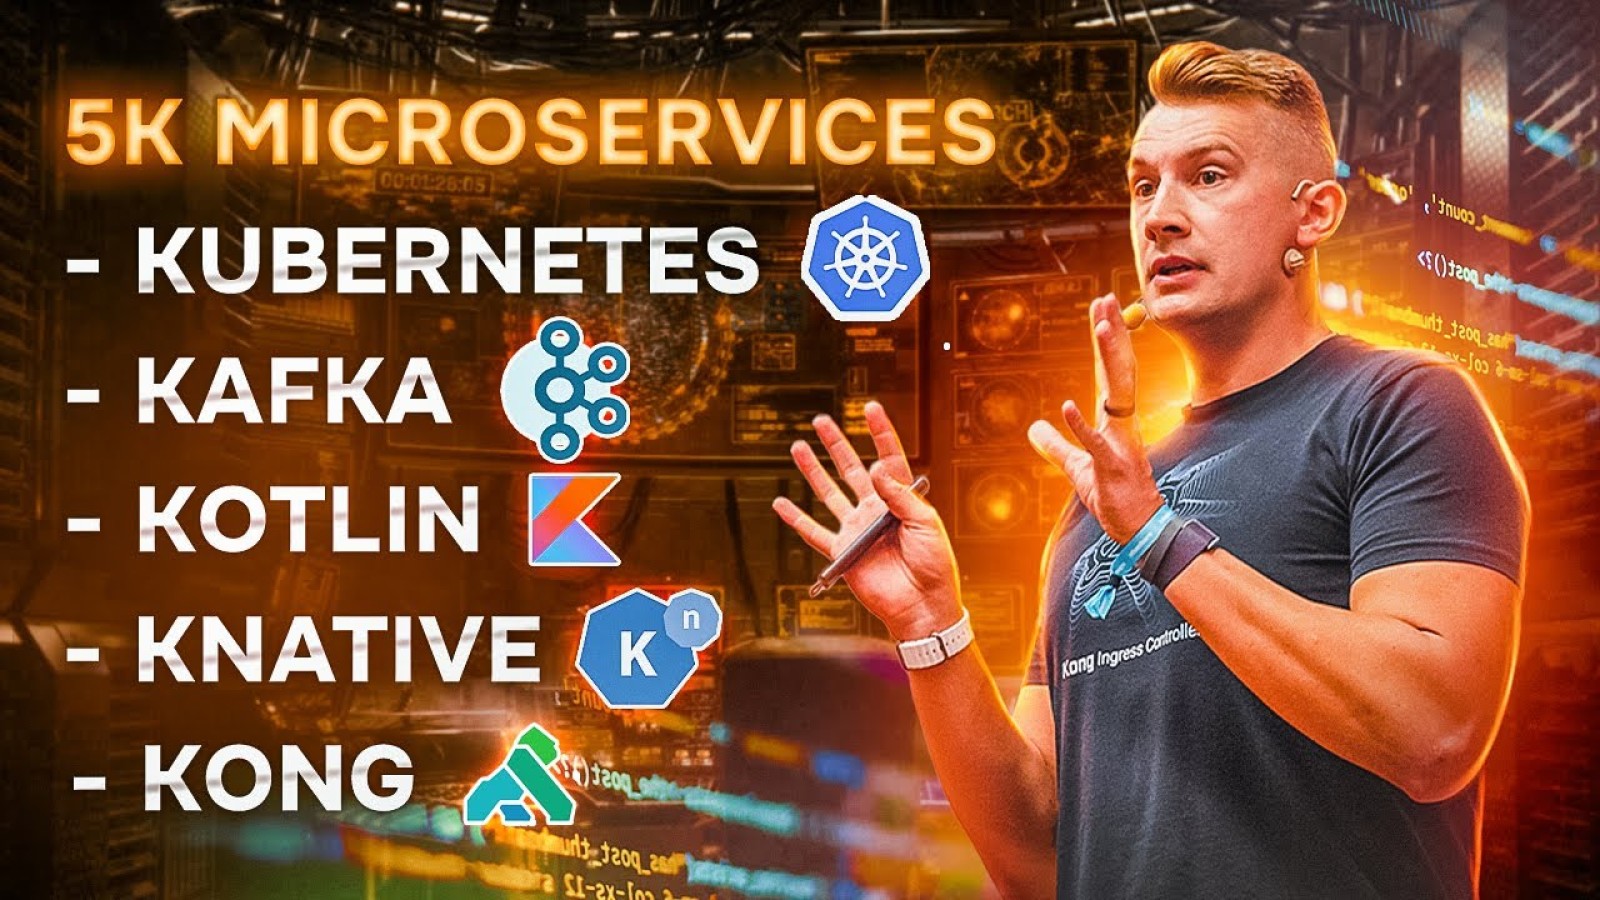 5K Serverless Microservices with Kotlin, Kafka, Kubernetes, KNative and Kong